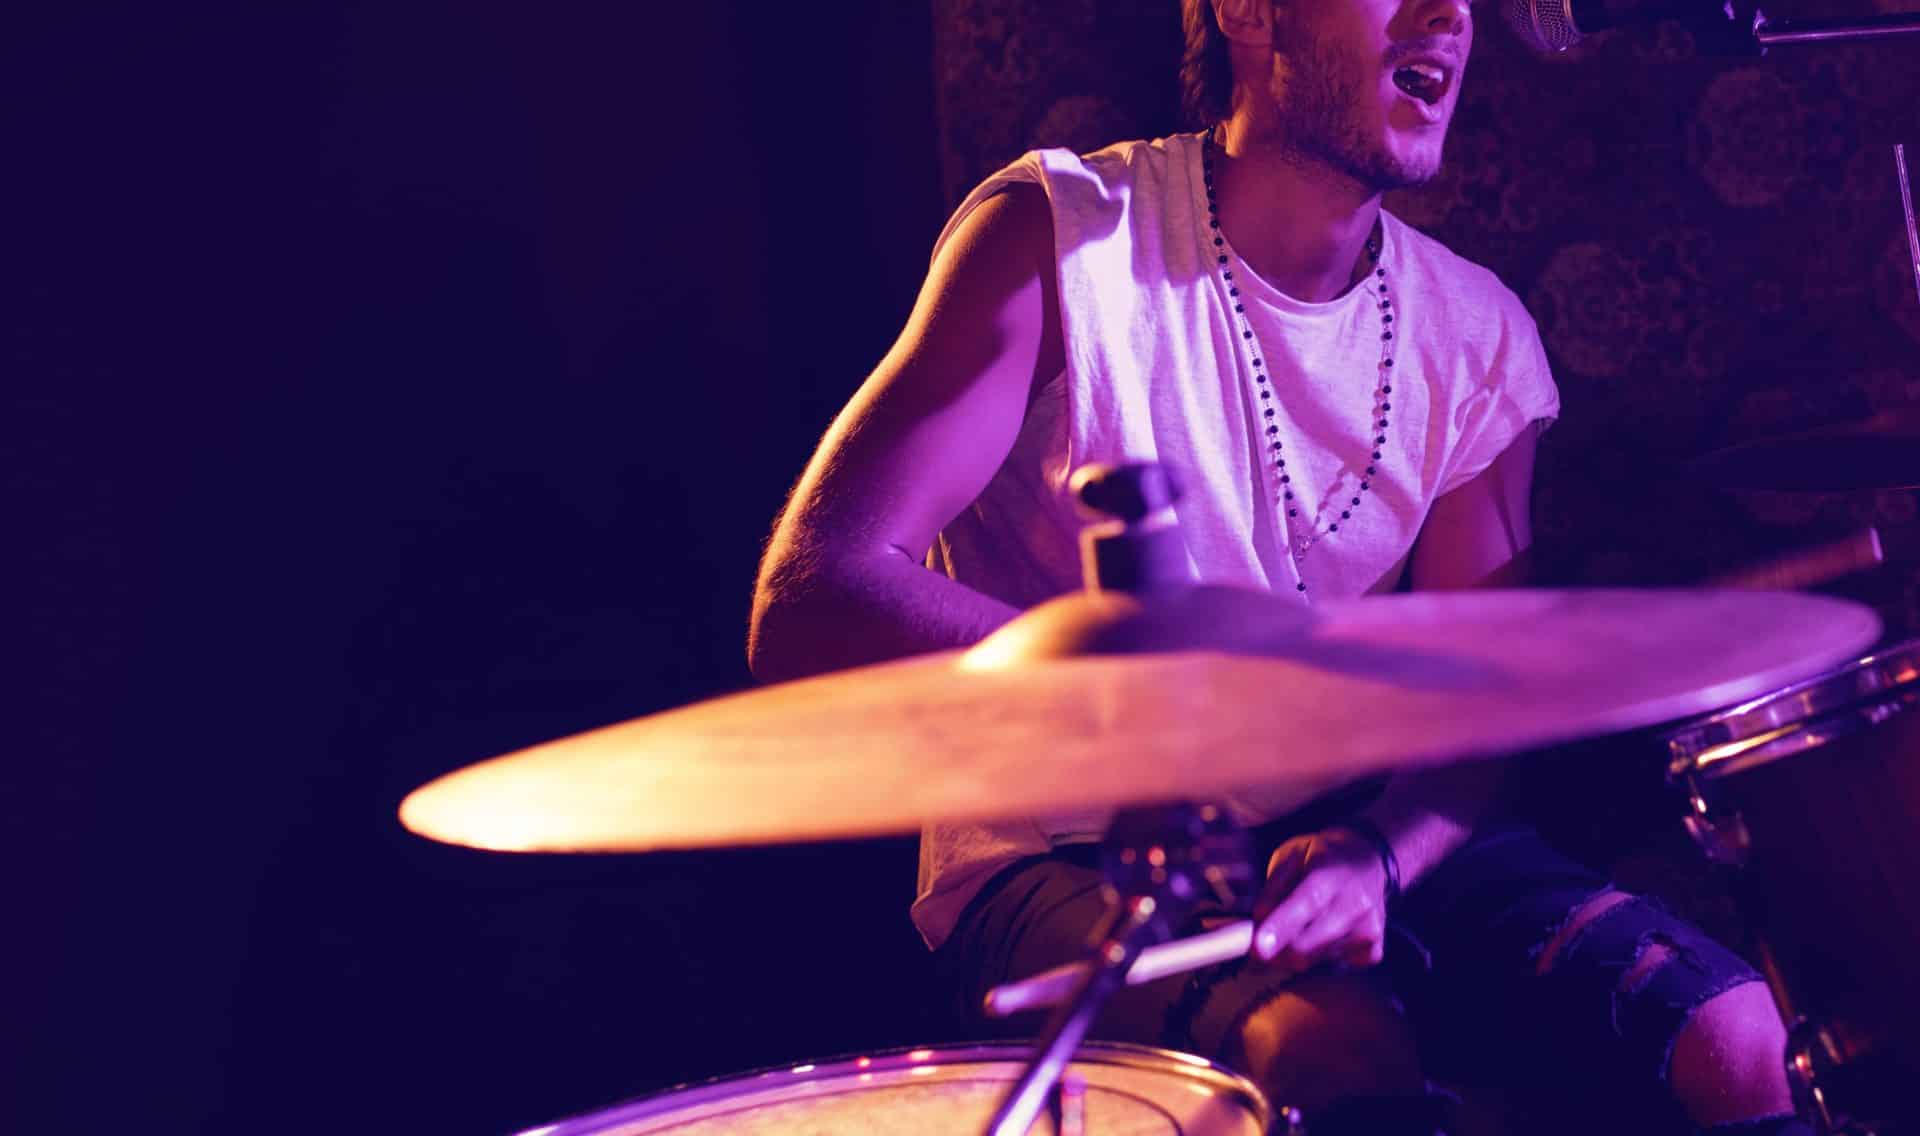 Singer Playing Drums While Performing In Nightclub